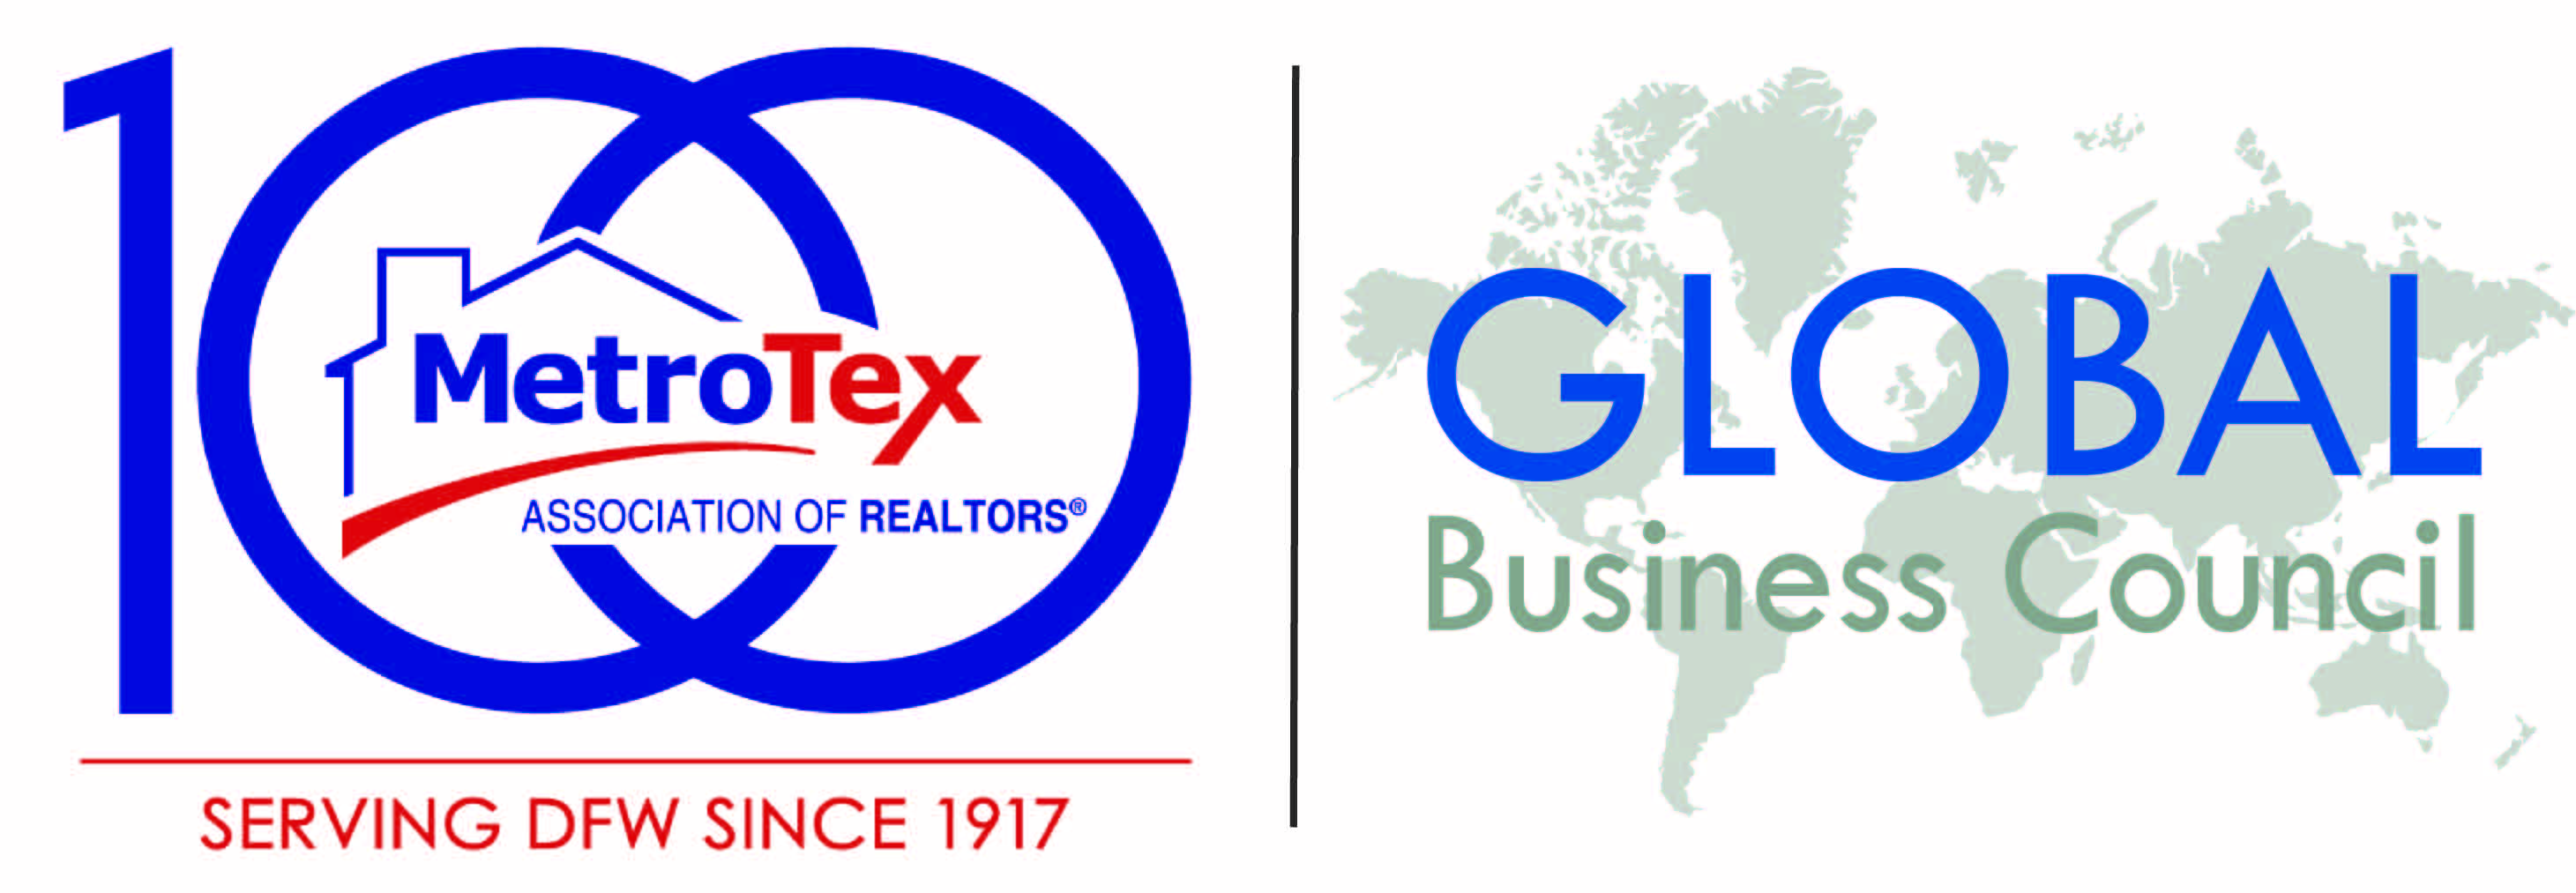 GBC Logo - MetroTex GBC Logo horizontal 100. DFW Real Estate